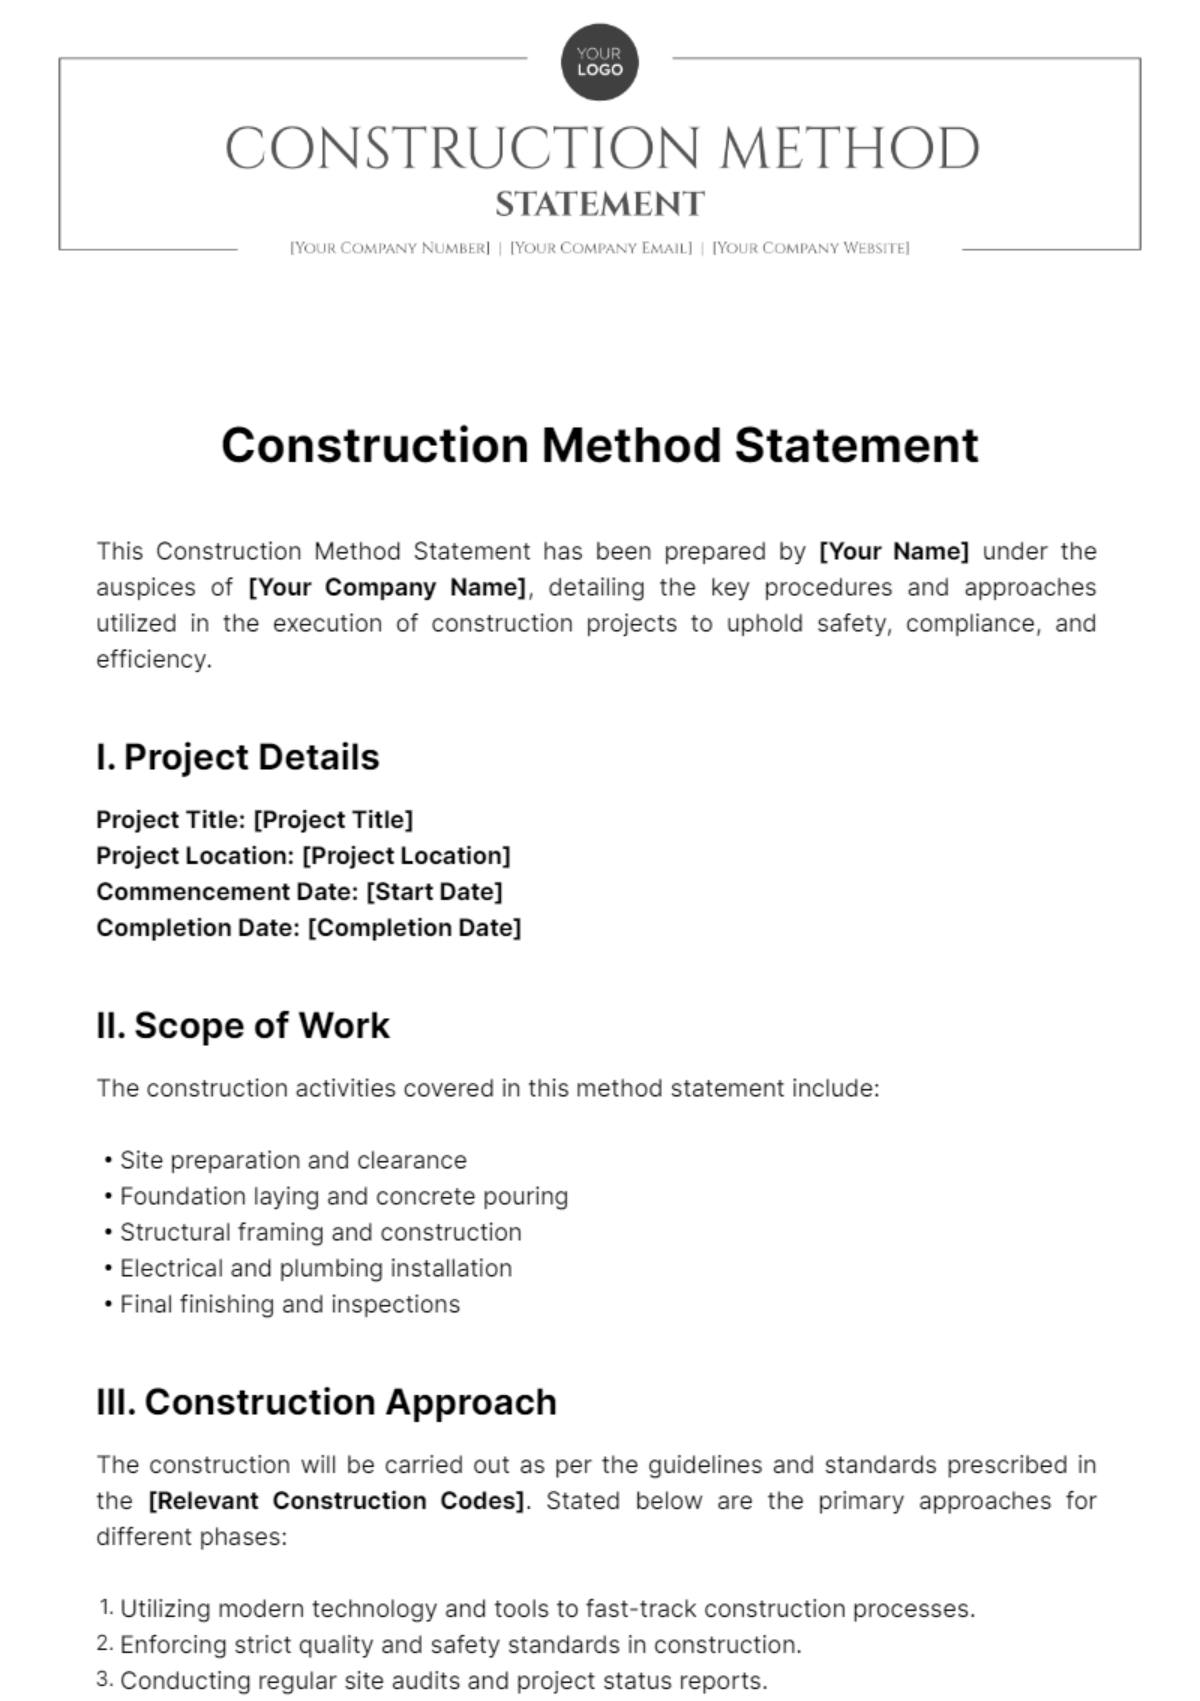 Construction Method Statement Template